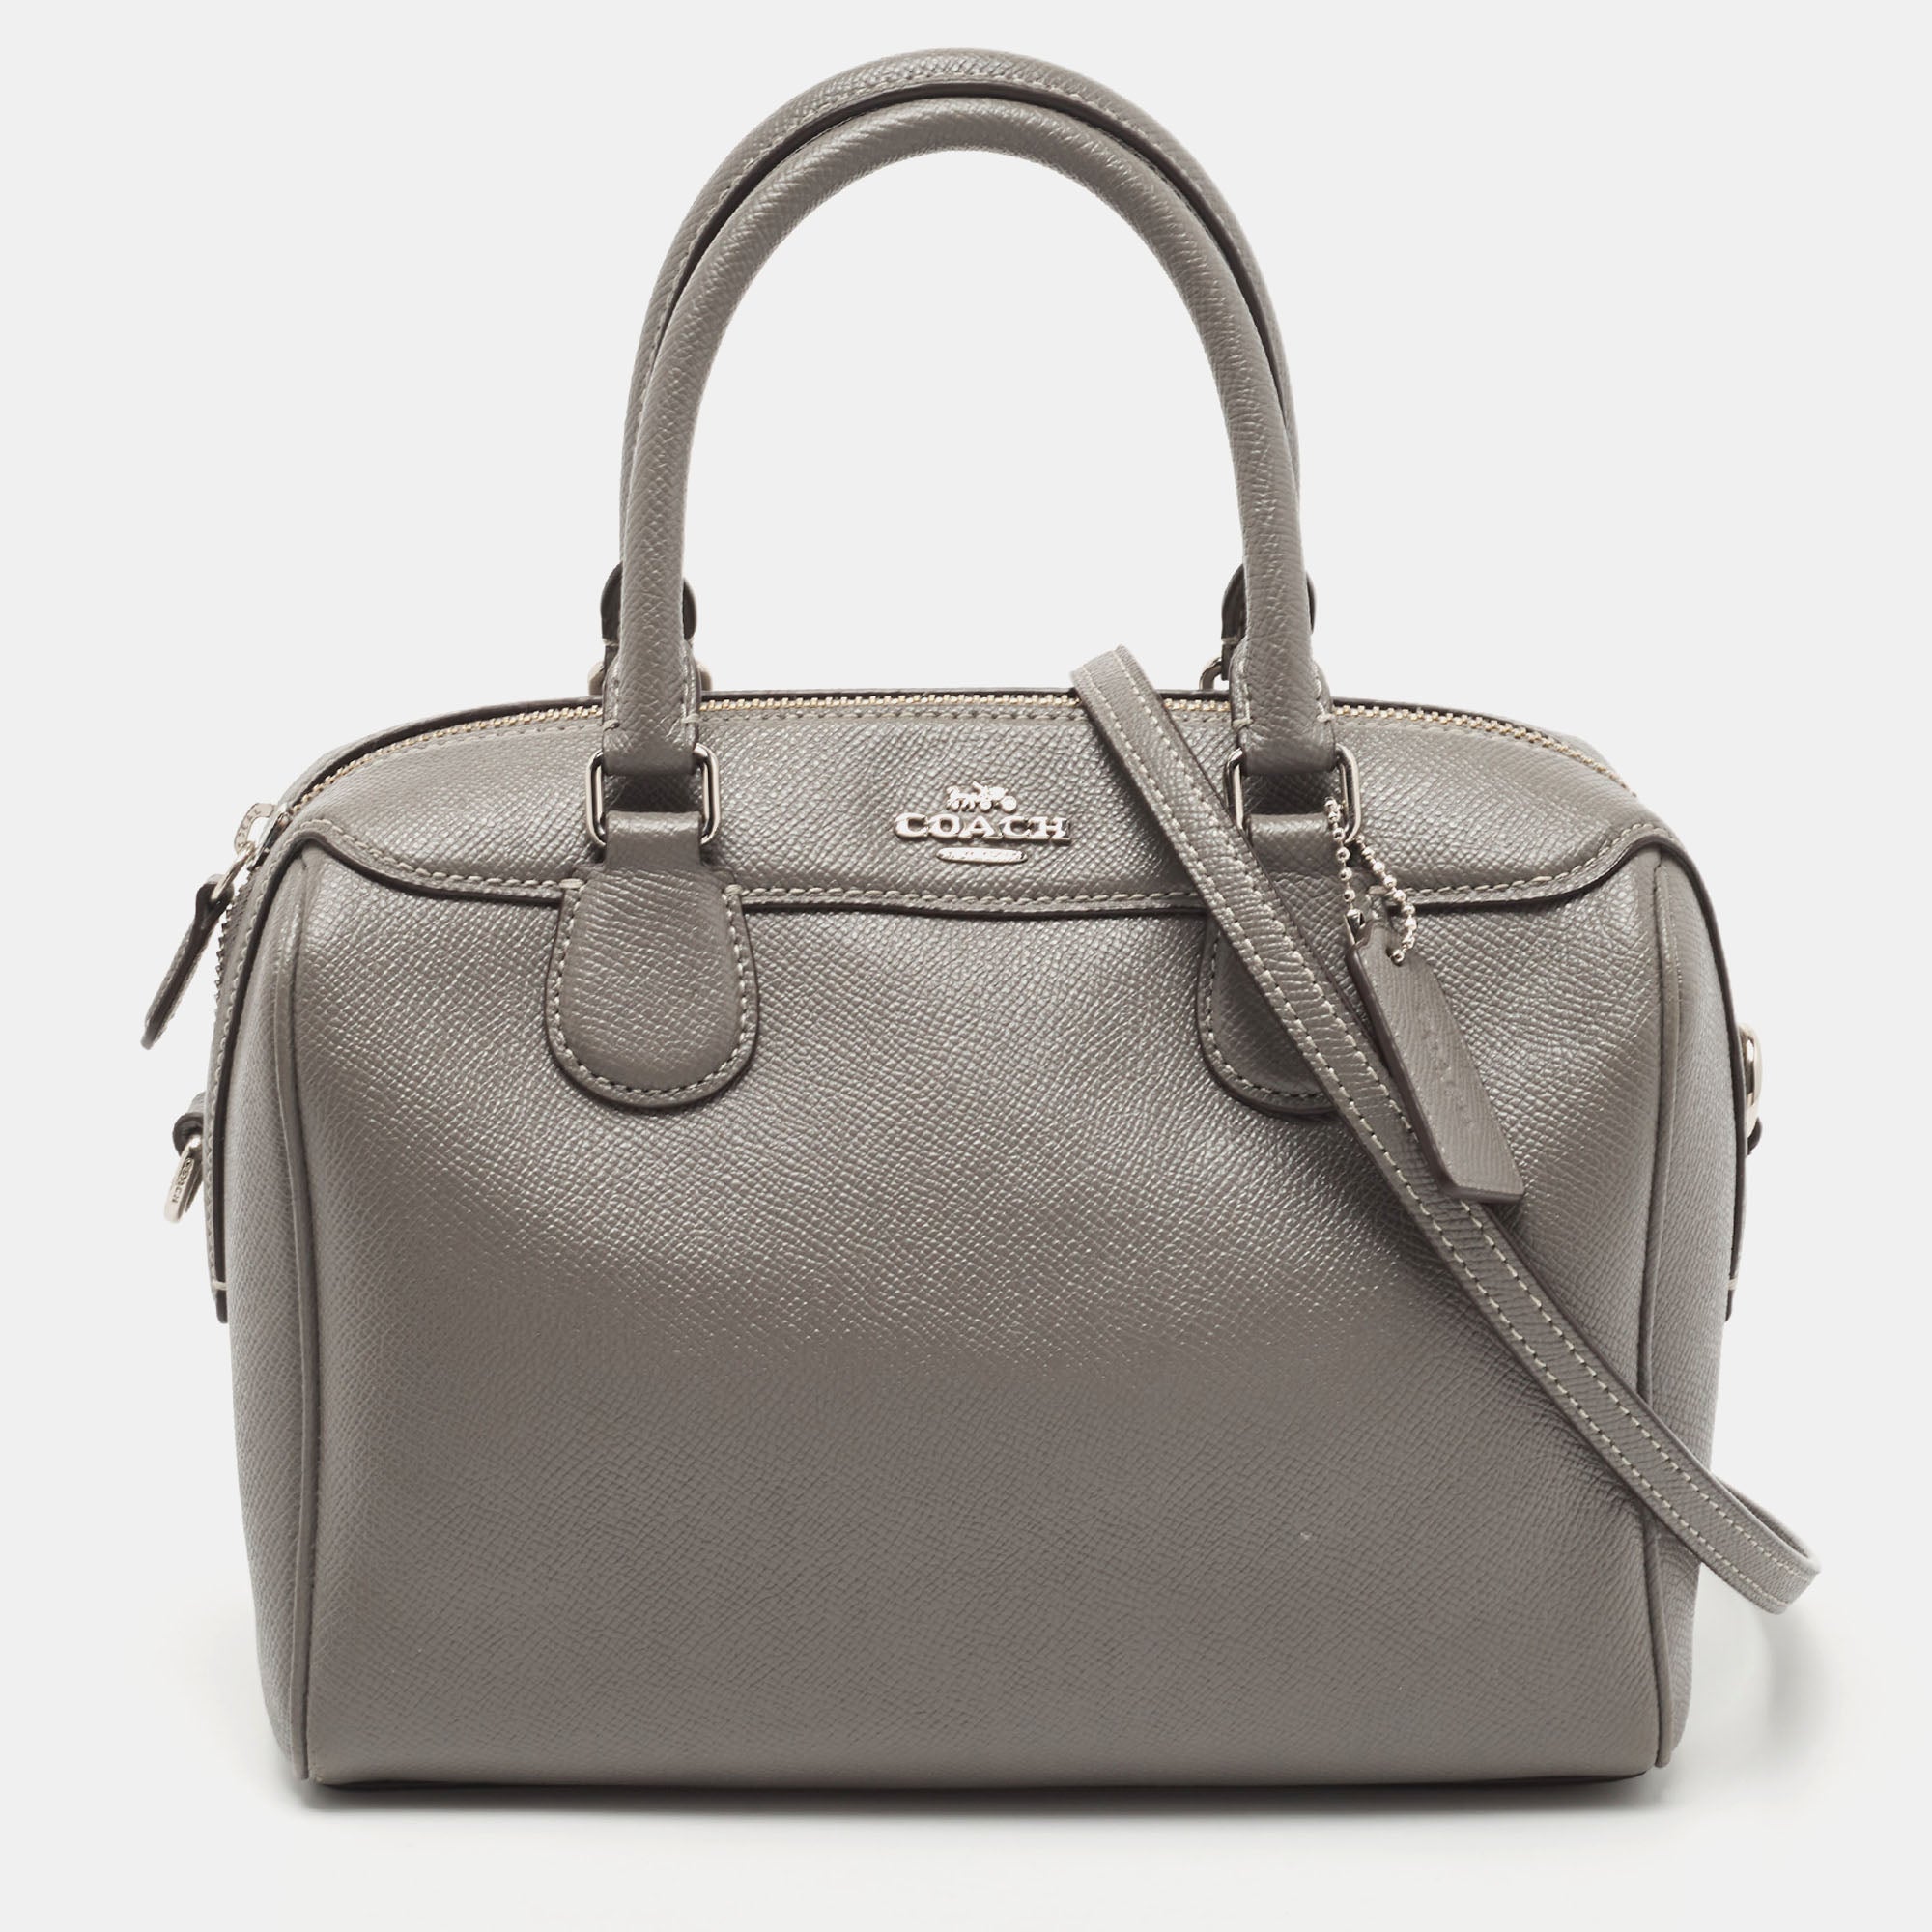 Coach Mini Bennett Satchel Handbag color black, Luxury, Bags